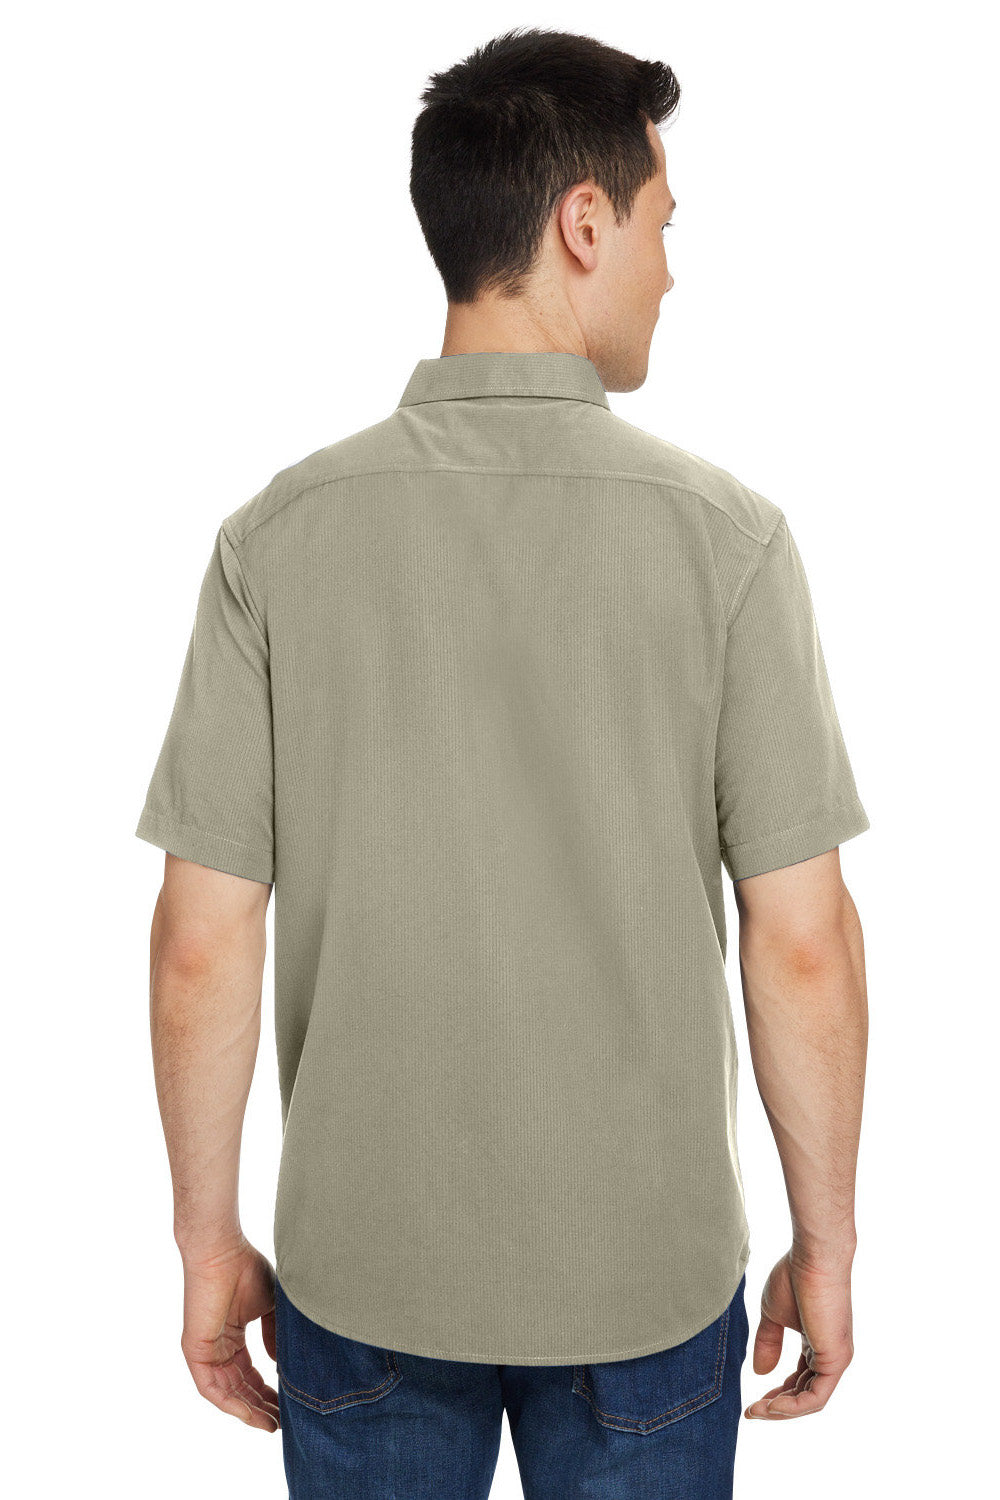 Marmot M14116 Mens Aerobora Short Sleeve Button Down Shirt w/ Pocket Vetiver Back